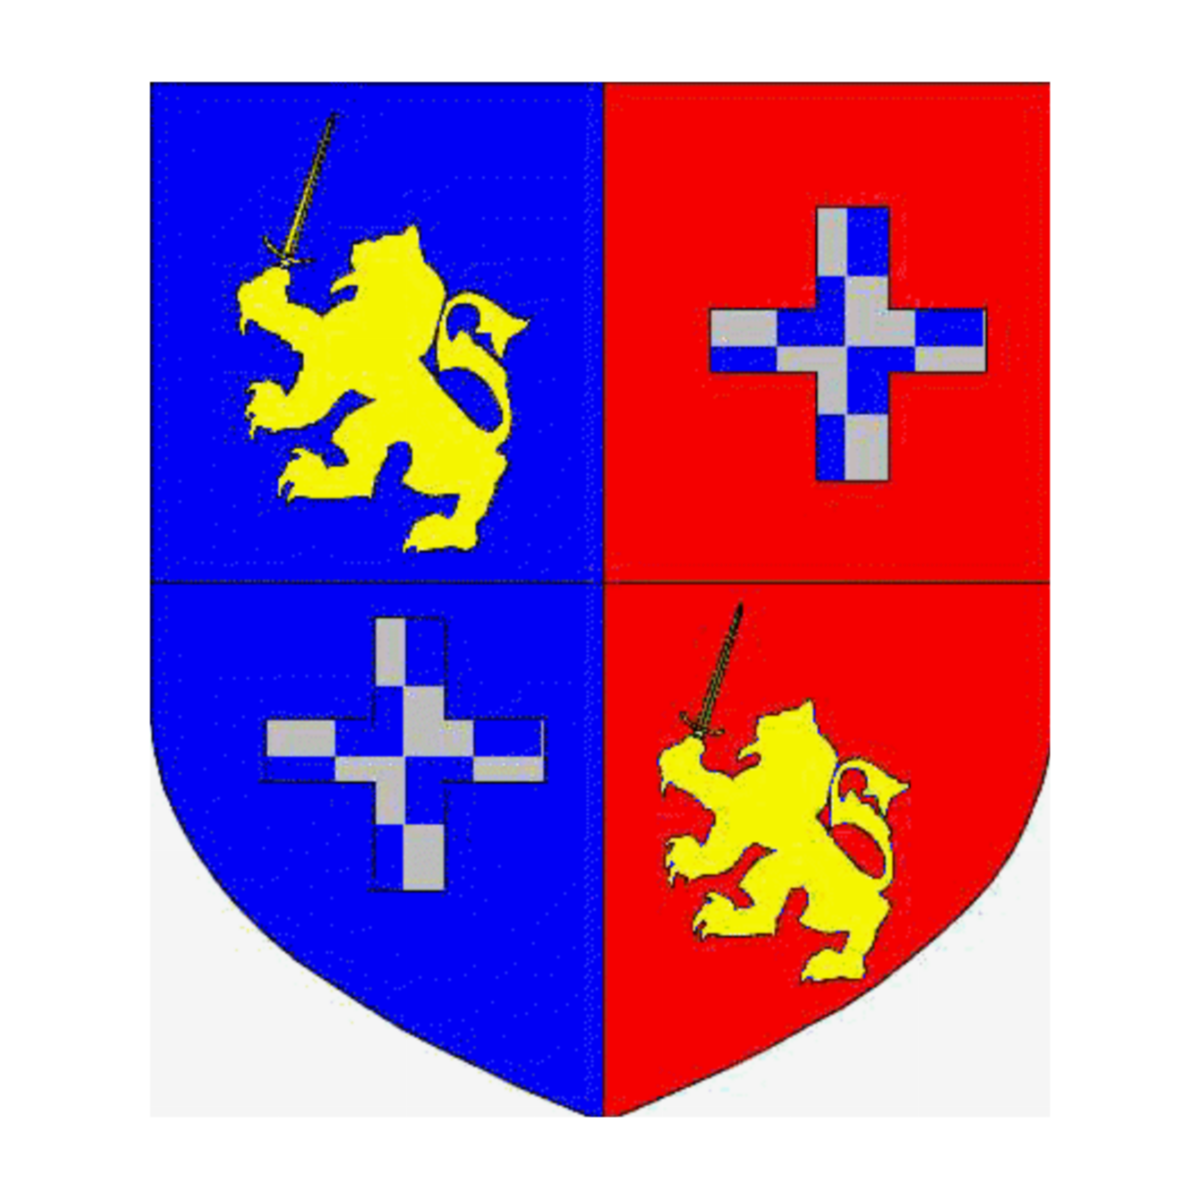 Coat of arms of family Vaquero